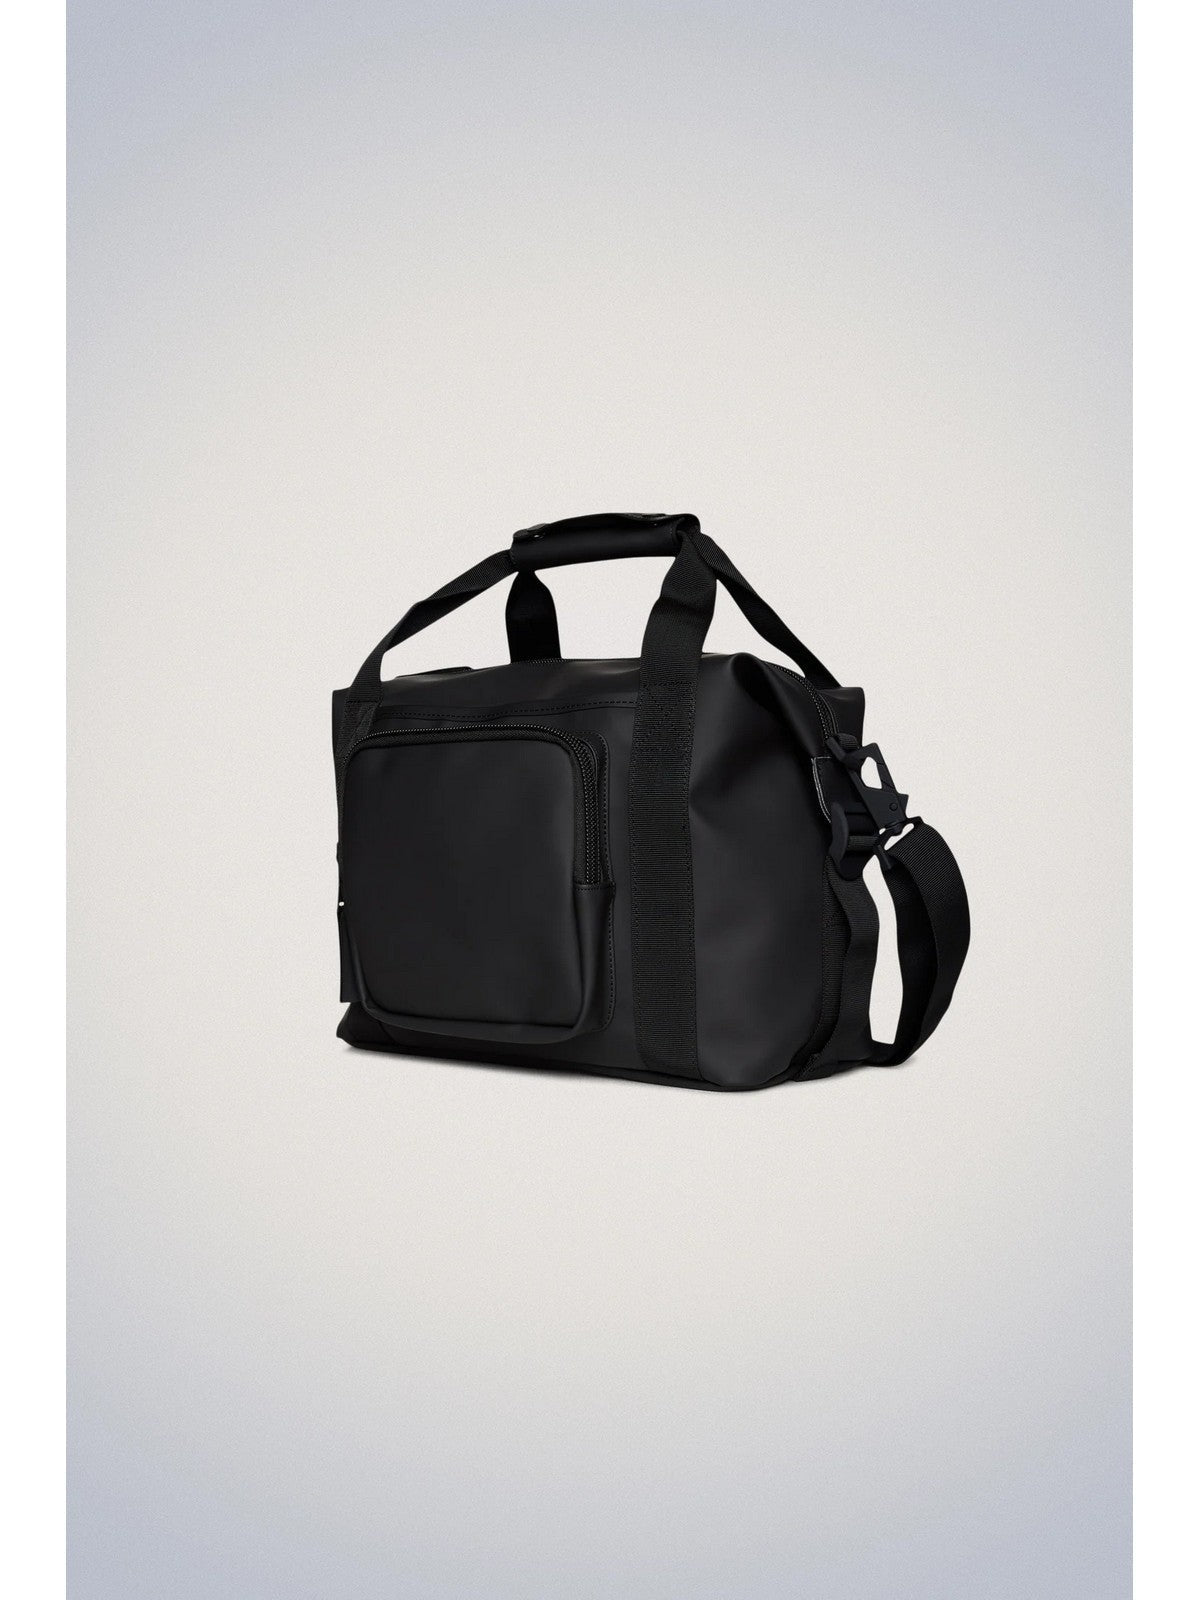 RAINS Unisexe Adulte Texel Kit Bag W3 14230 01 Noir